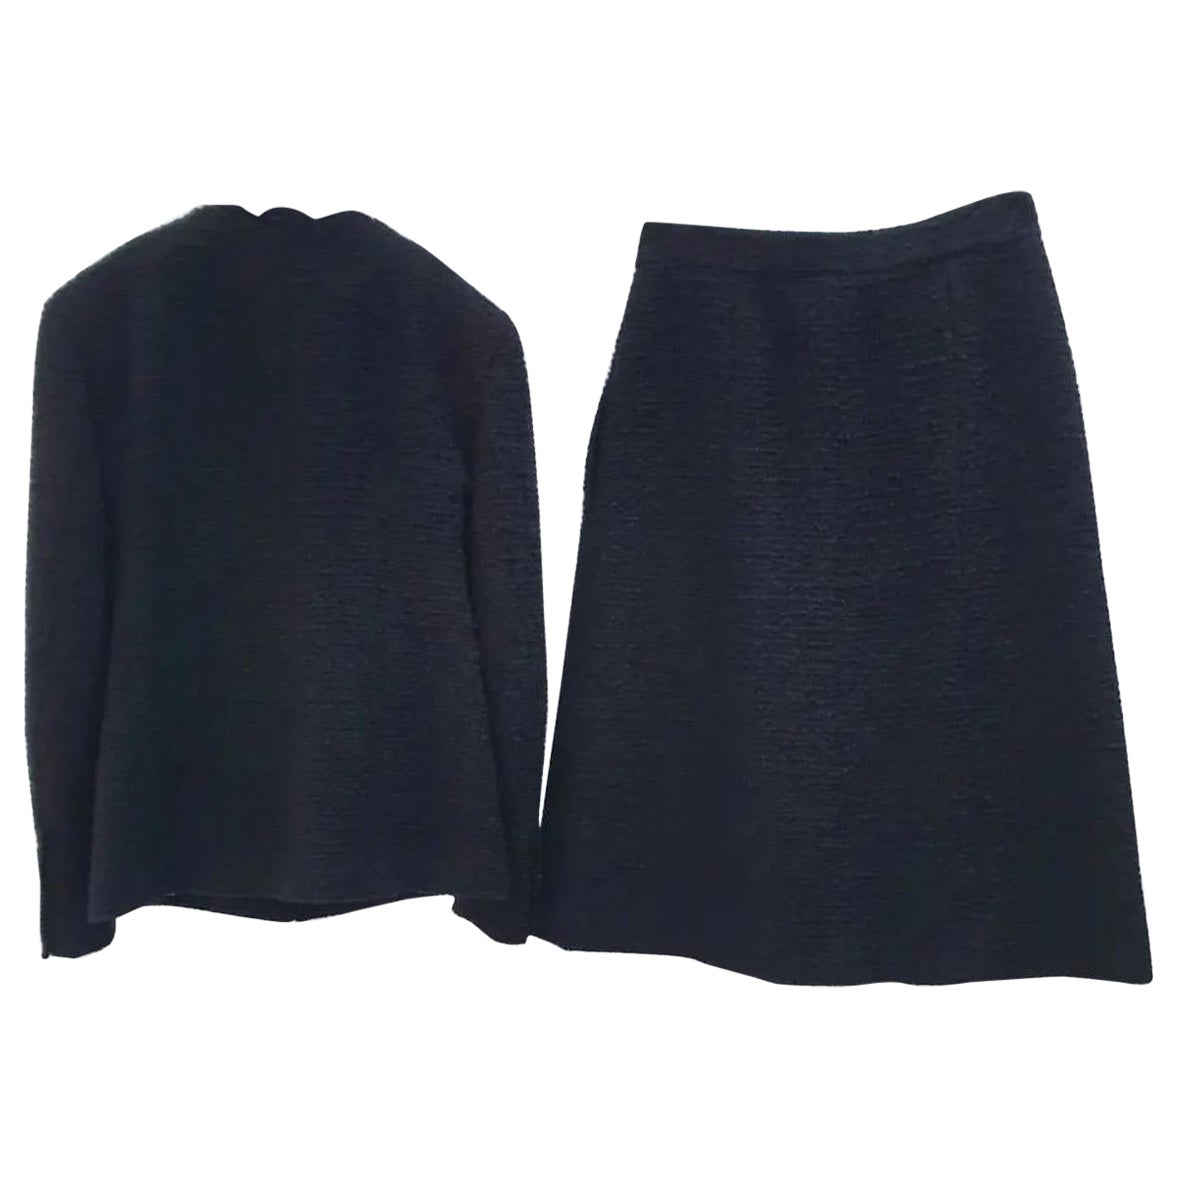 Chanel 2020 Schwarzes Tweed Jacke Rock Anzug-Set aus Tweed 